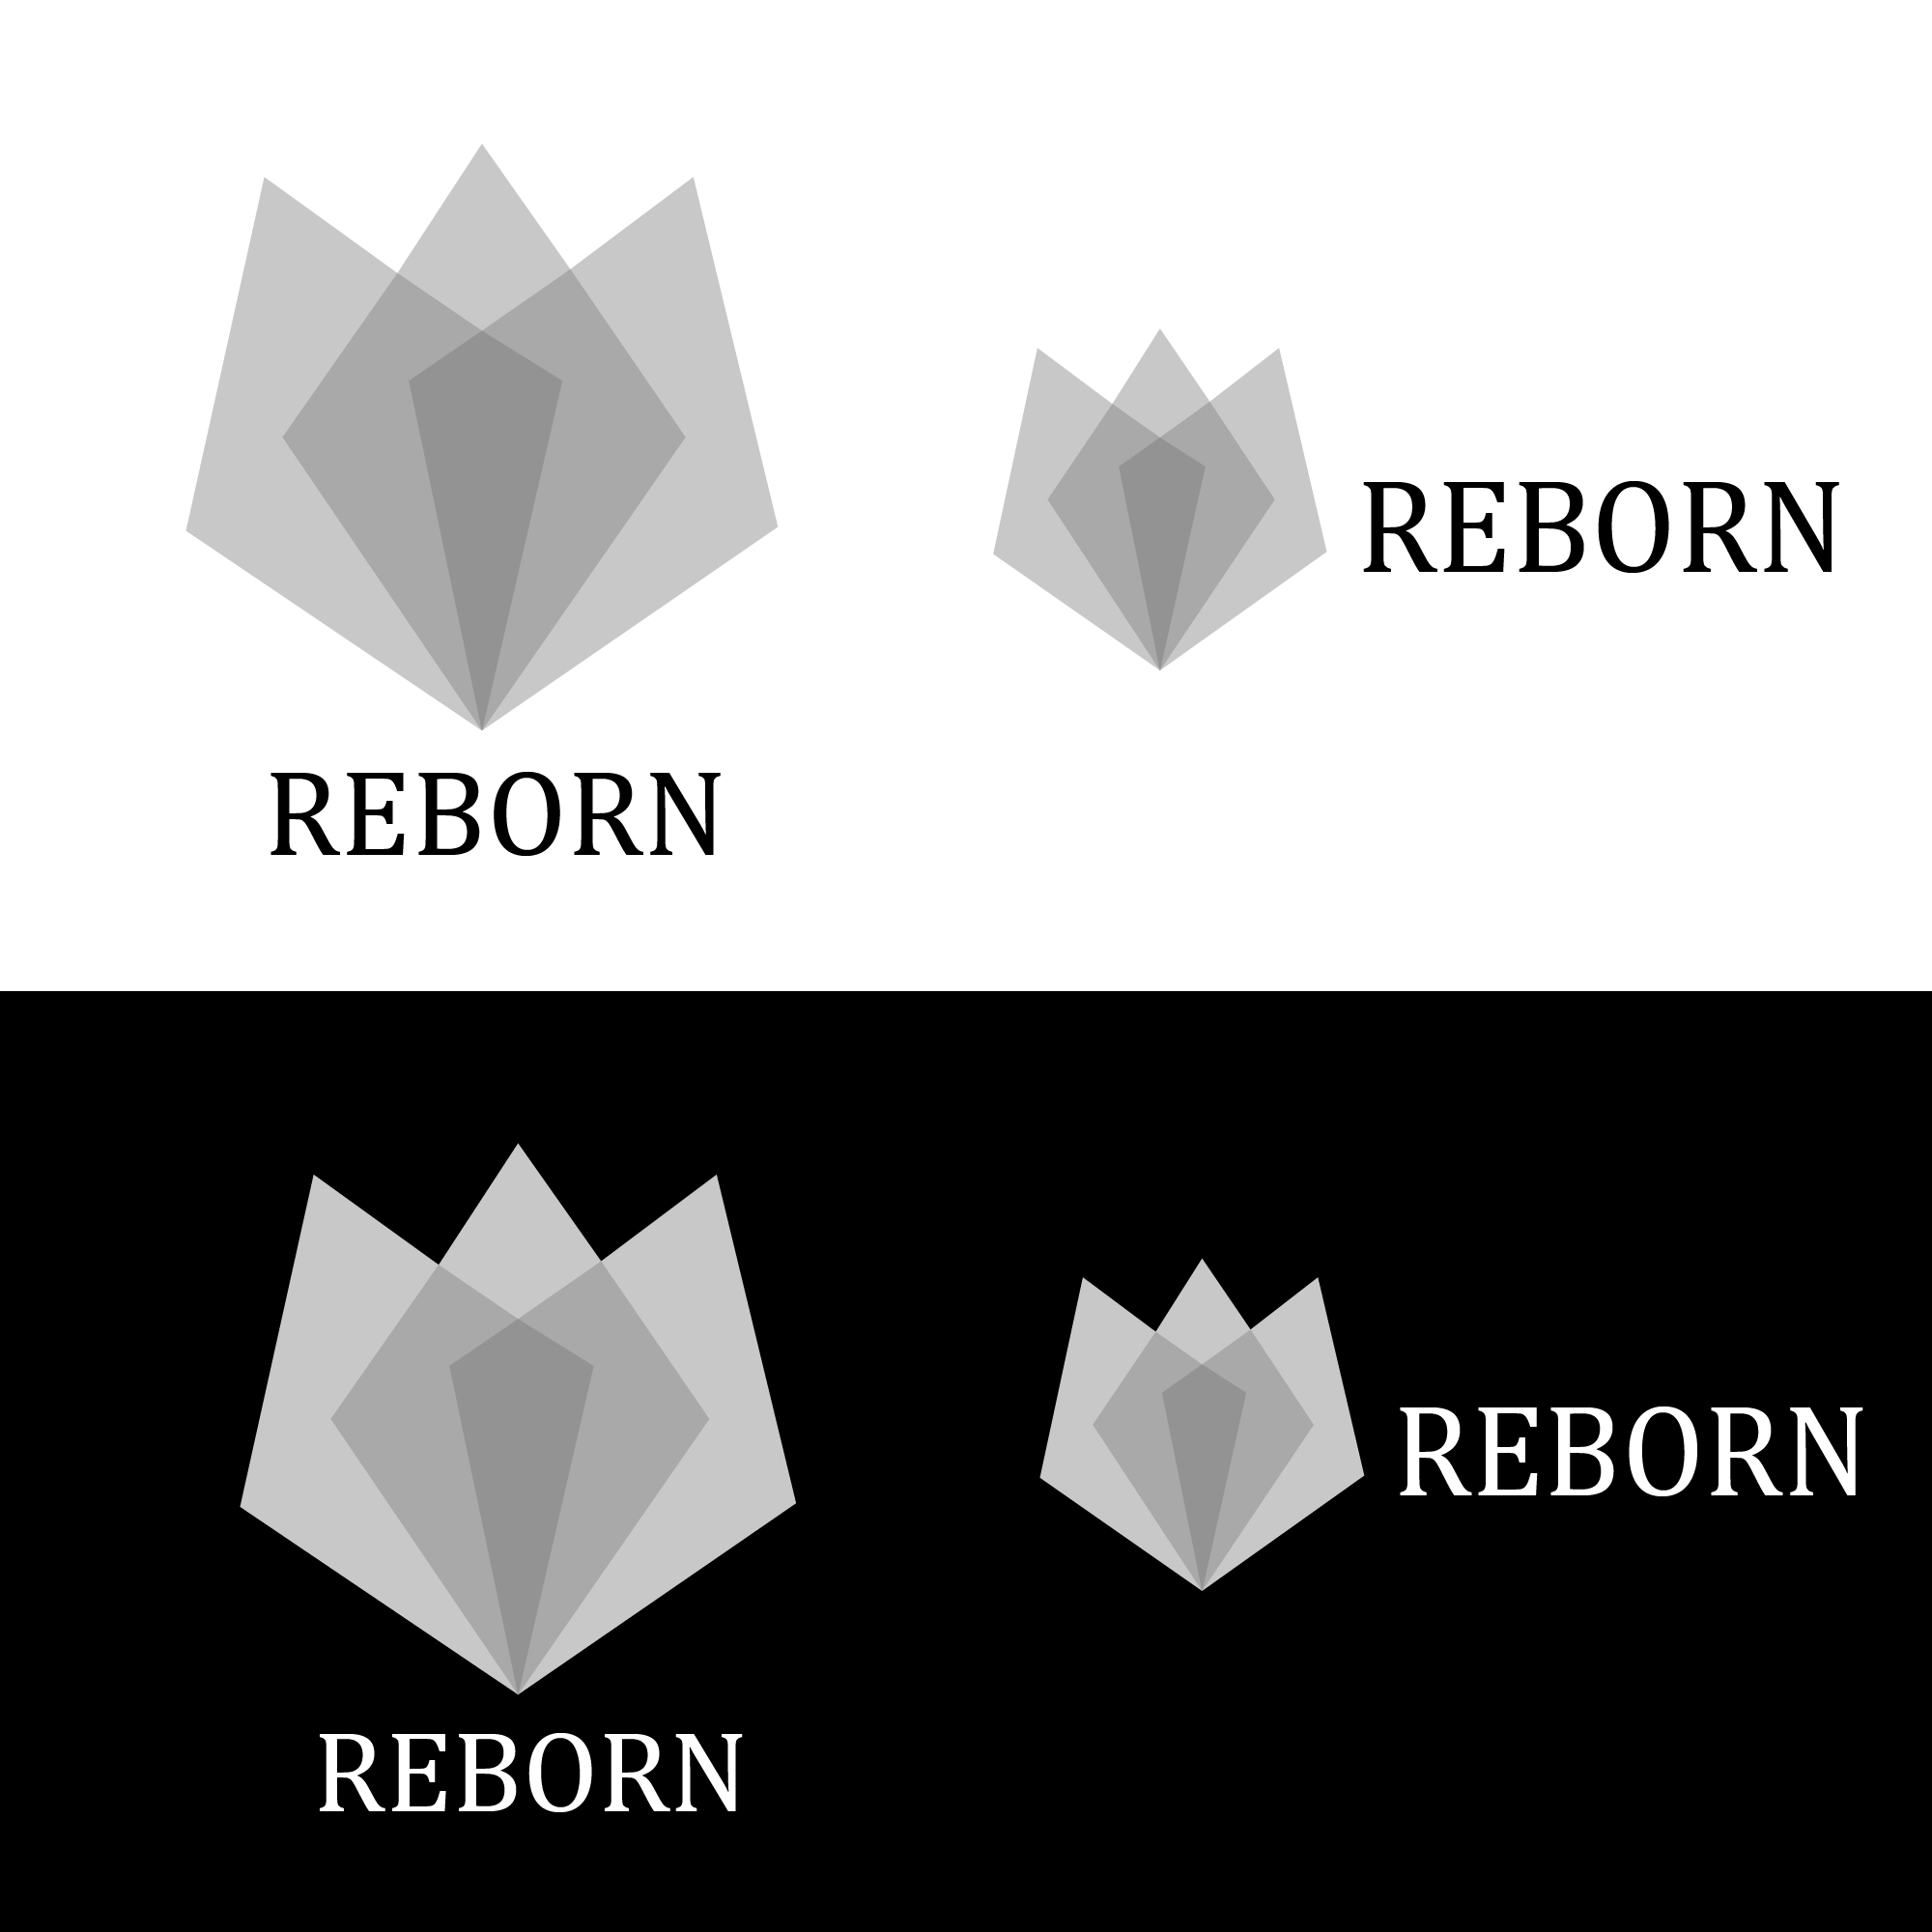 Reborn company logo cover image.